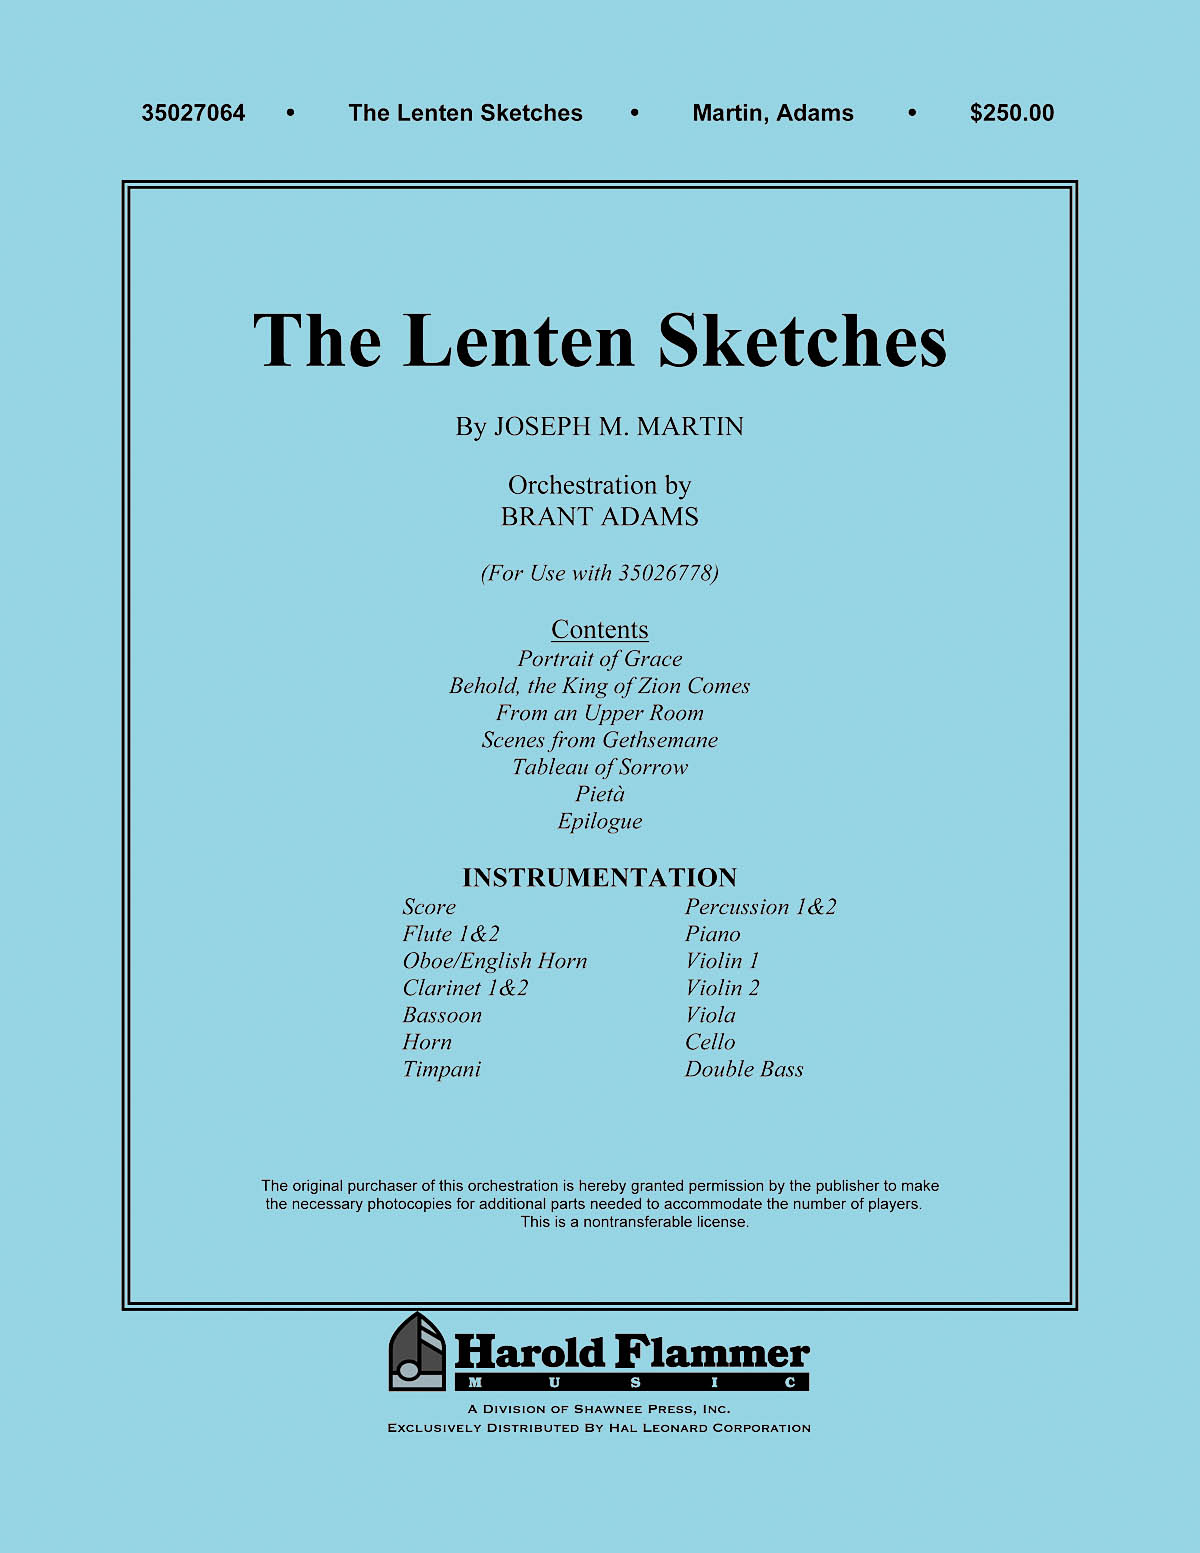 Joseph M. Martin: The Lenten Sketches: Parts